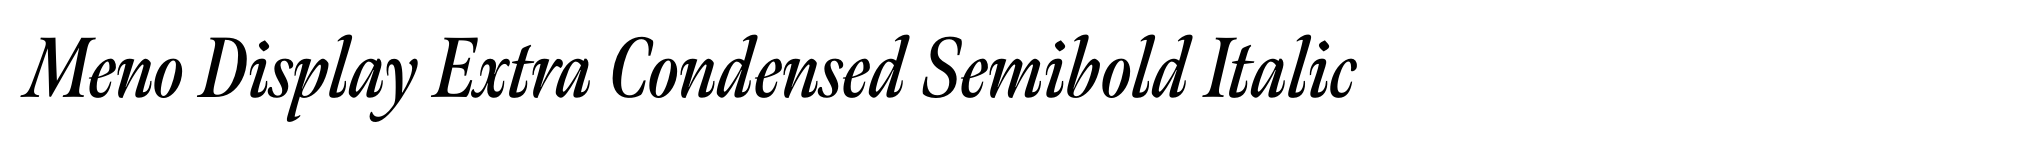 Meno Display Extra Condensed Semibold Italic image